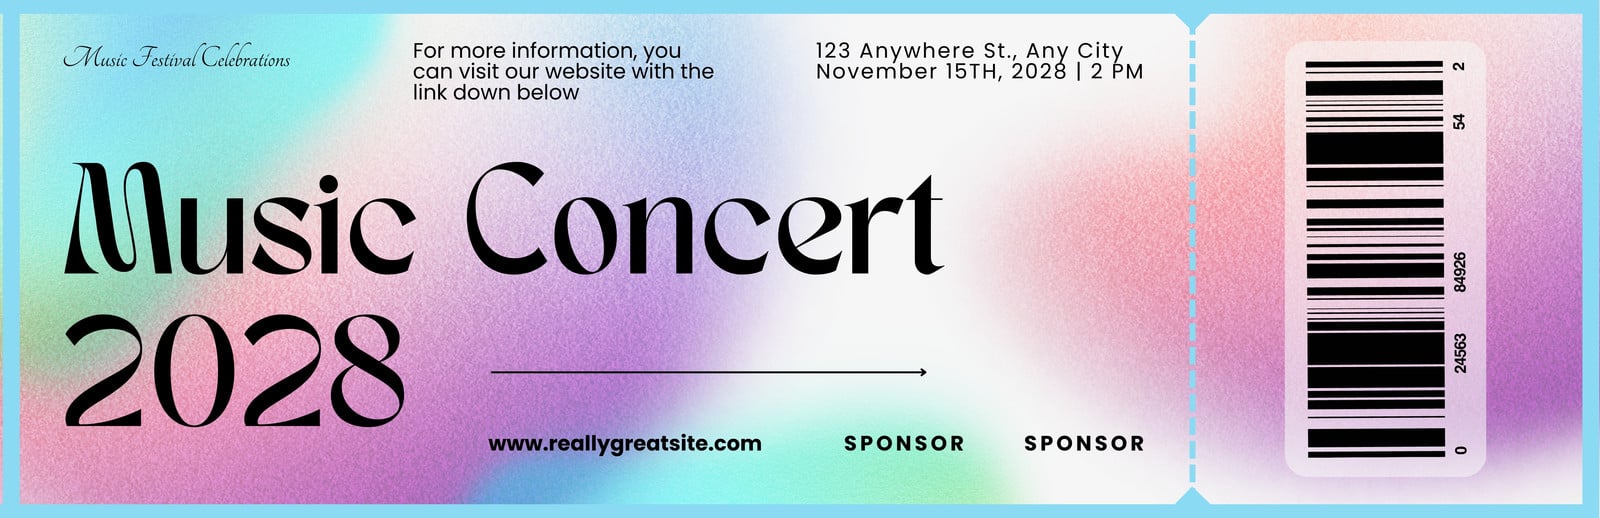 blank concert ticket template